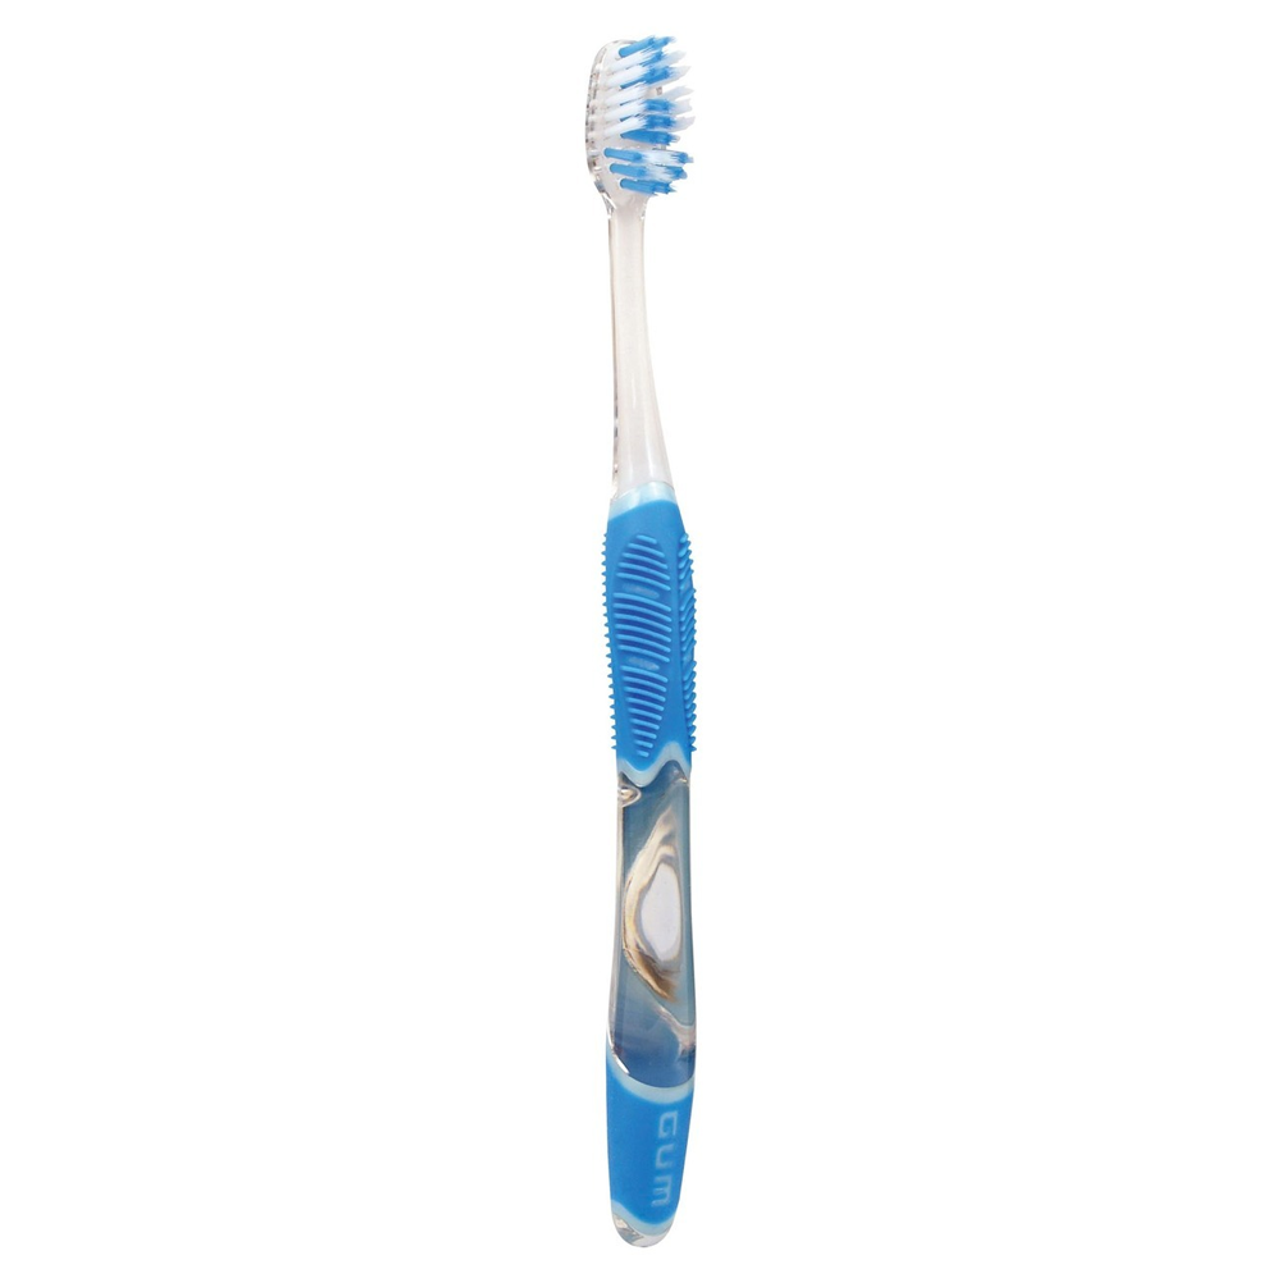 Sunstar GUM Technique Toothbrush, Patented Quad-Grip, Sensitive Bristles, Compact Head, 1 dz/bx